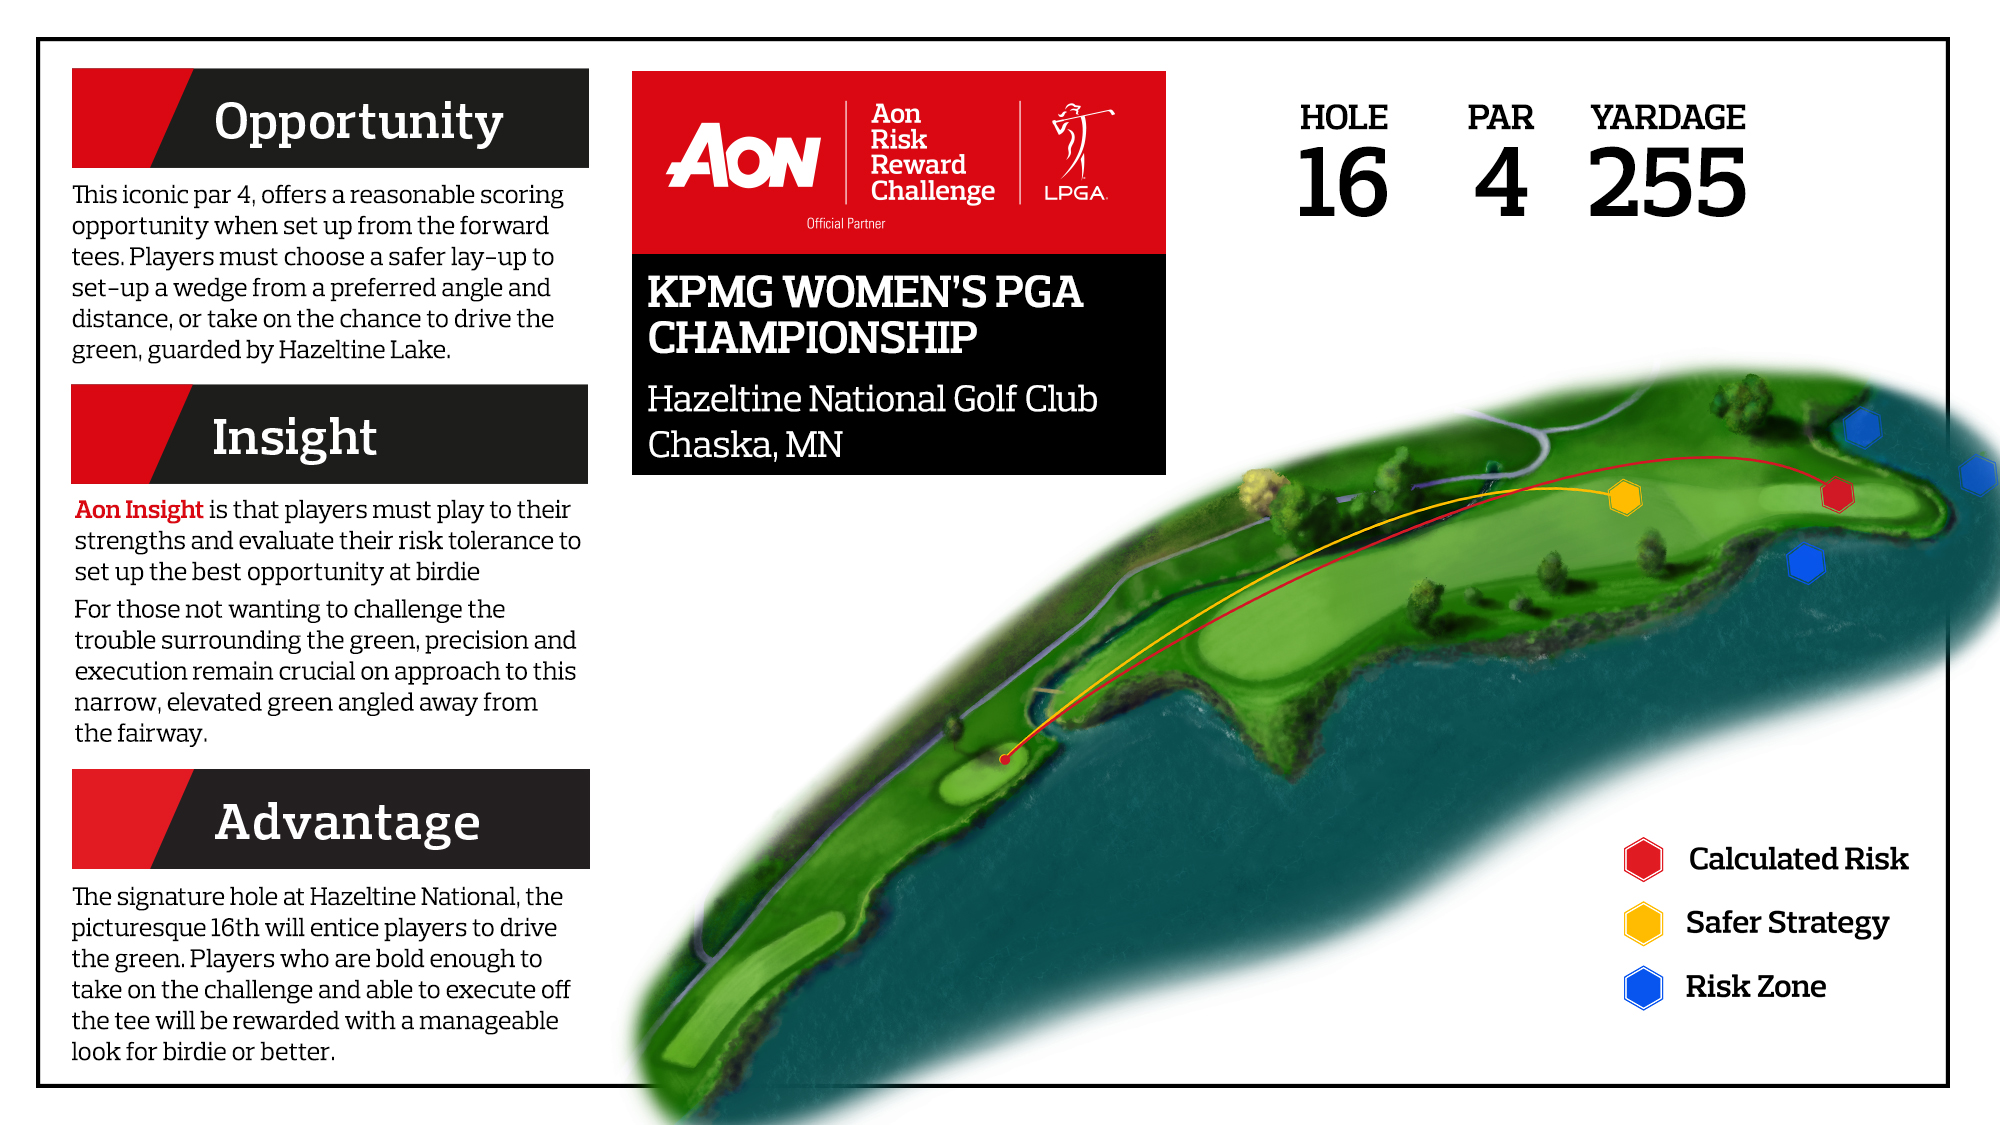 2019 Things to Know for the KPMG Womens PGA Championship LPGA Ladies Professional Golf Association